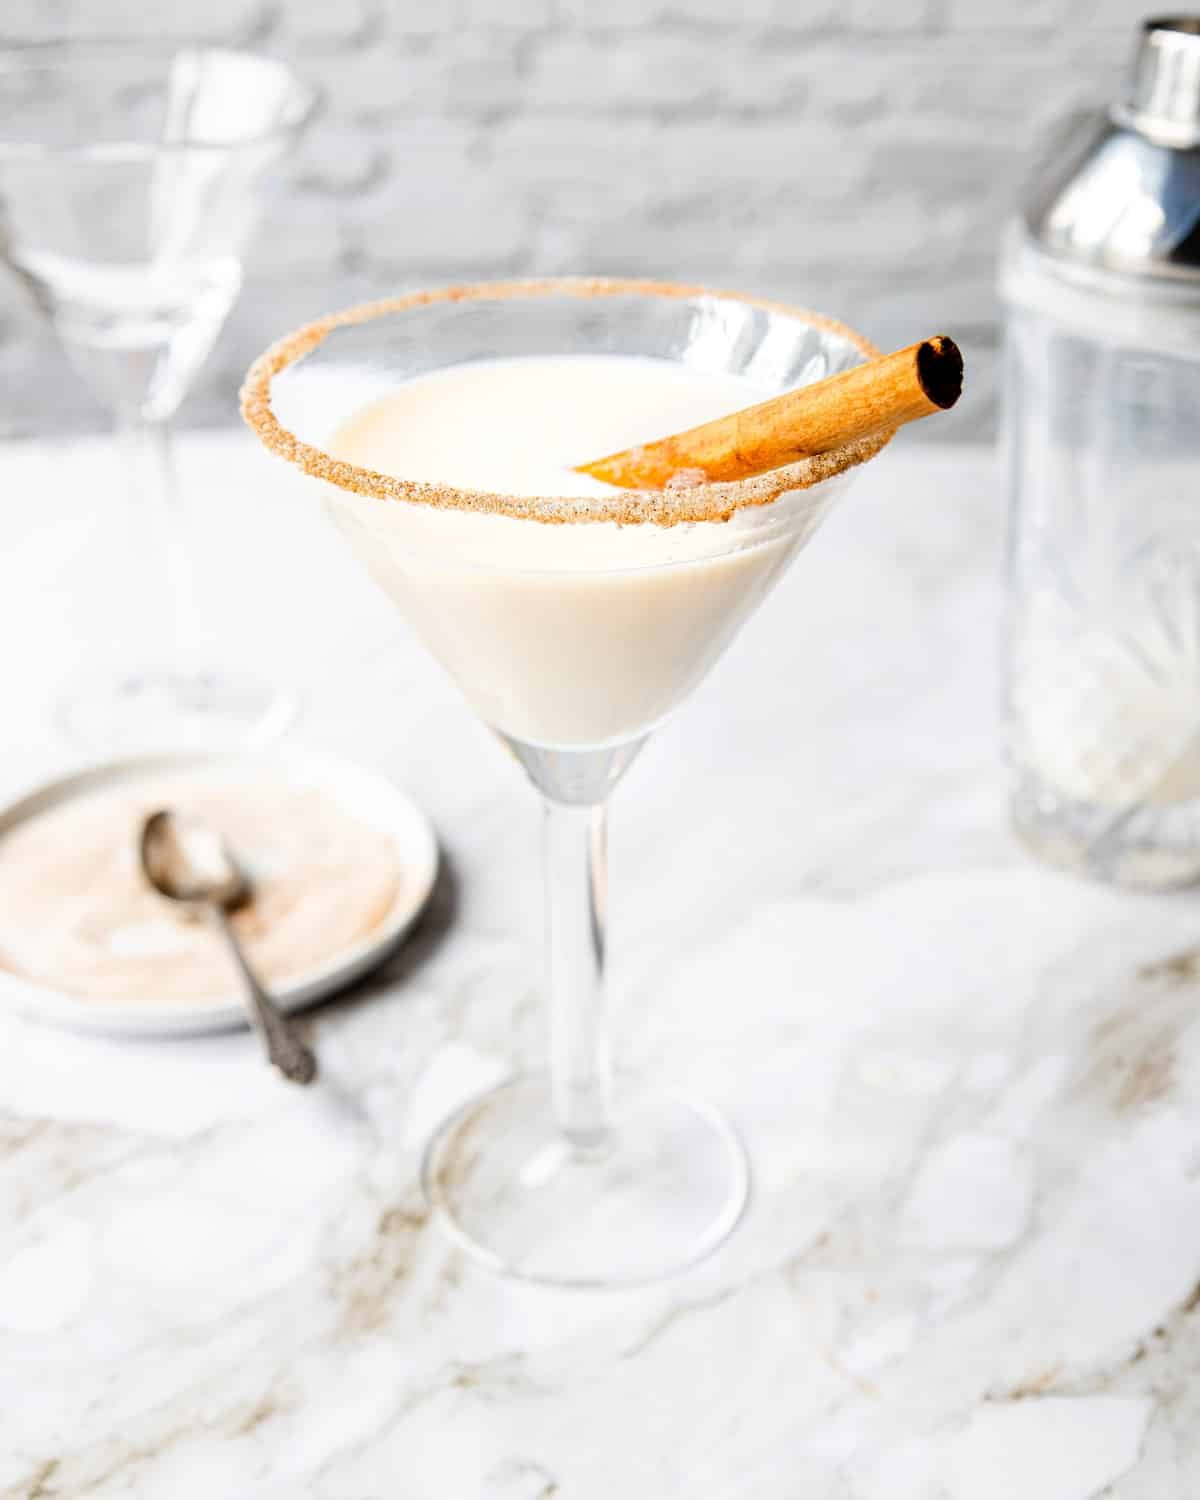 Cinnamon Toast Crunch Drink in a martini glass with a cinnamon stick garnish